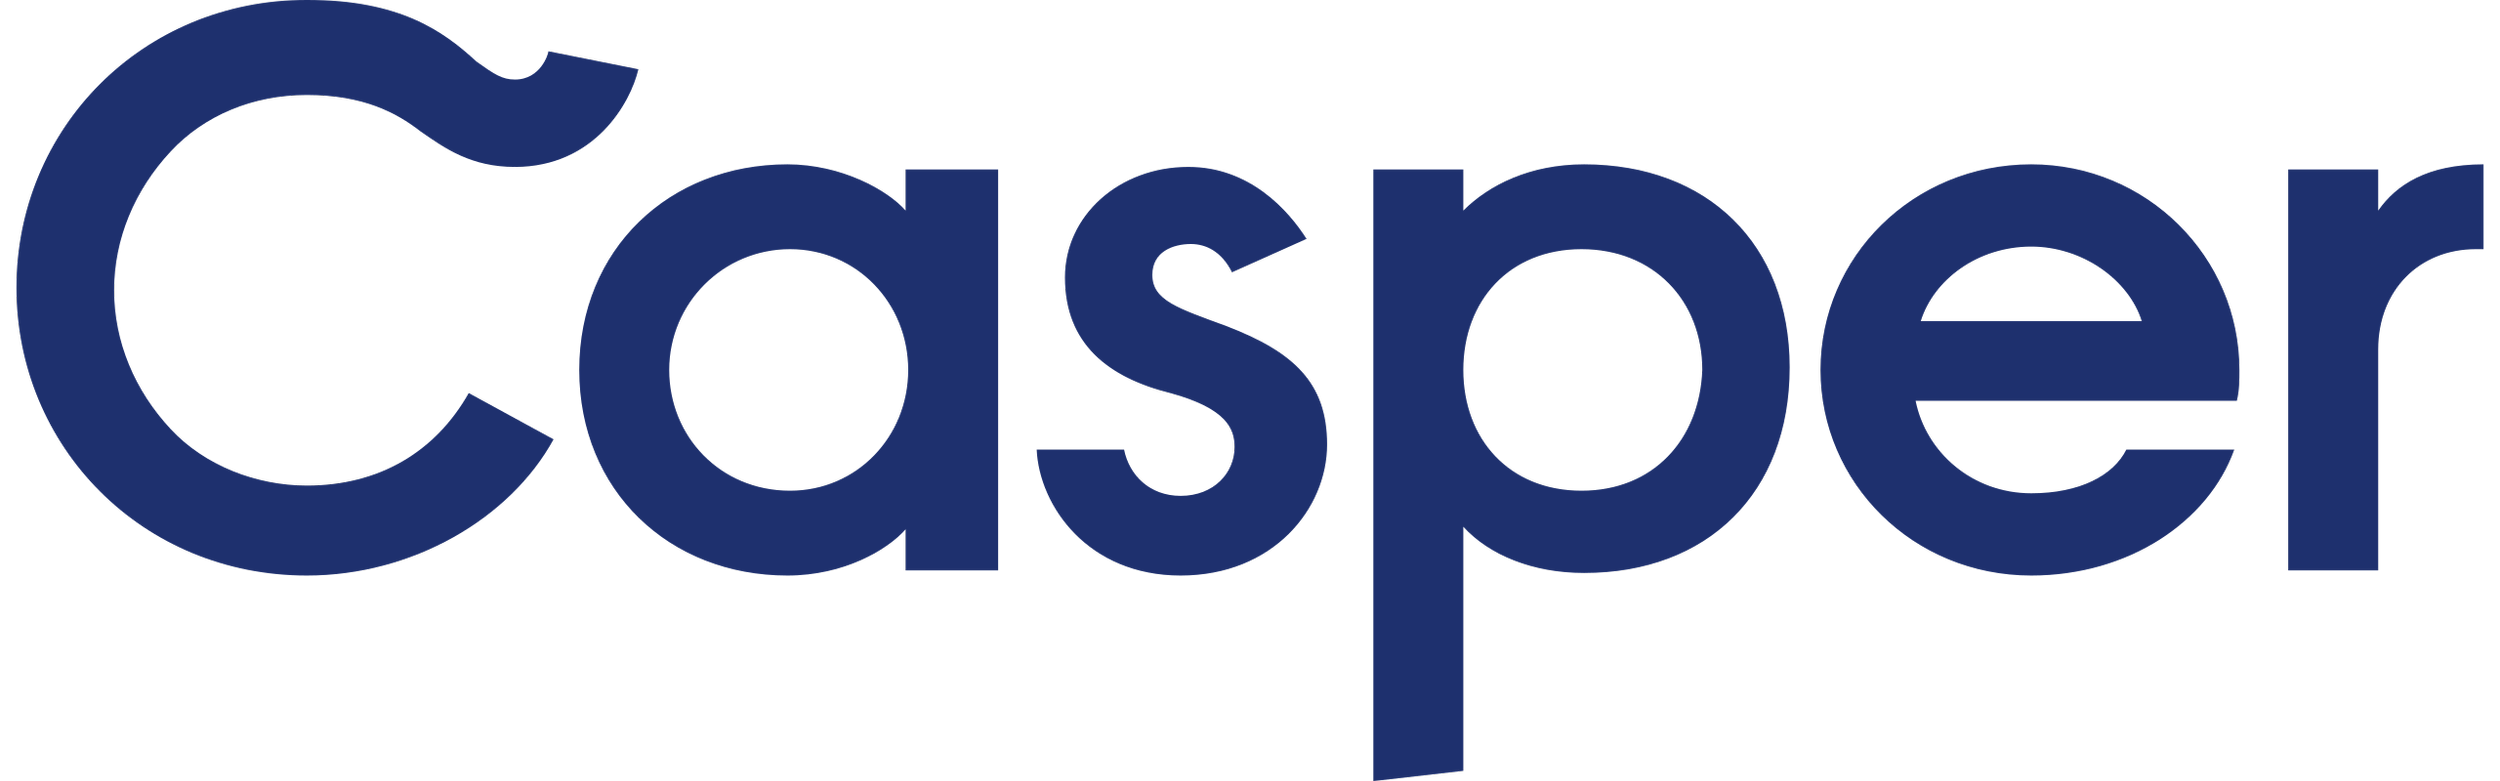 Casper_Sleep_logo.png